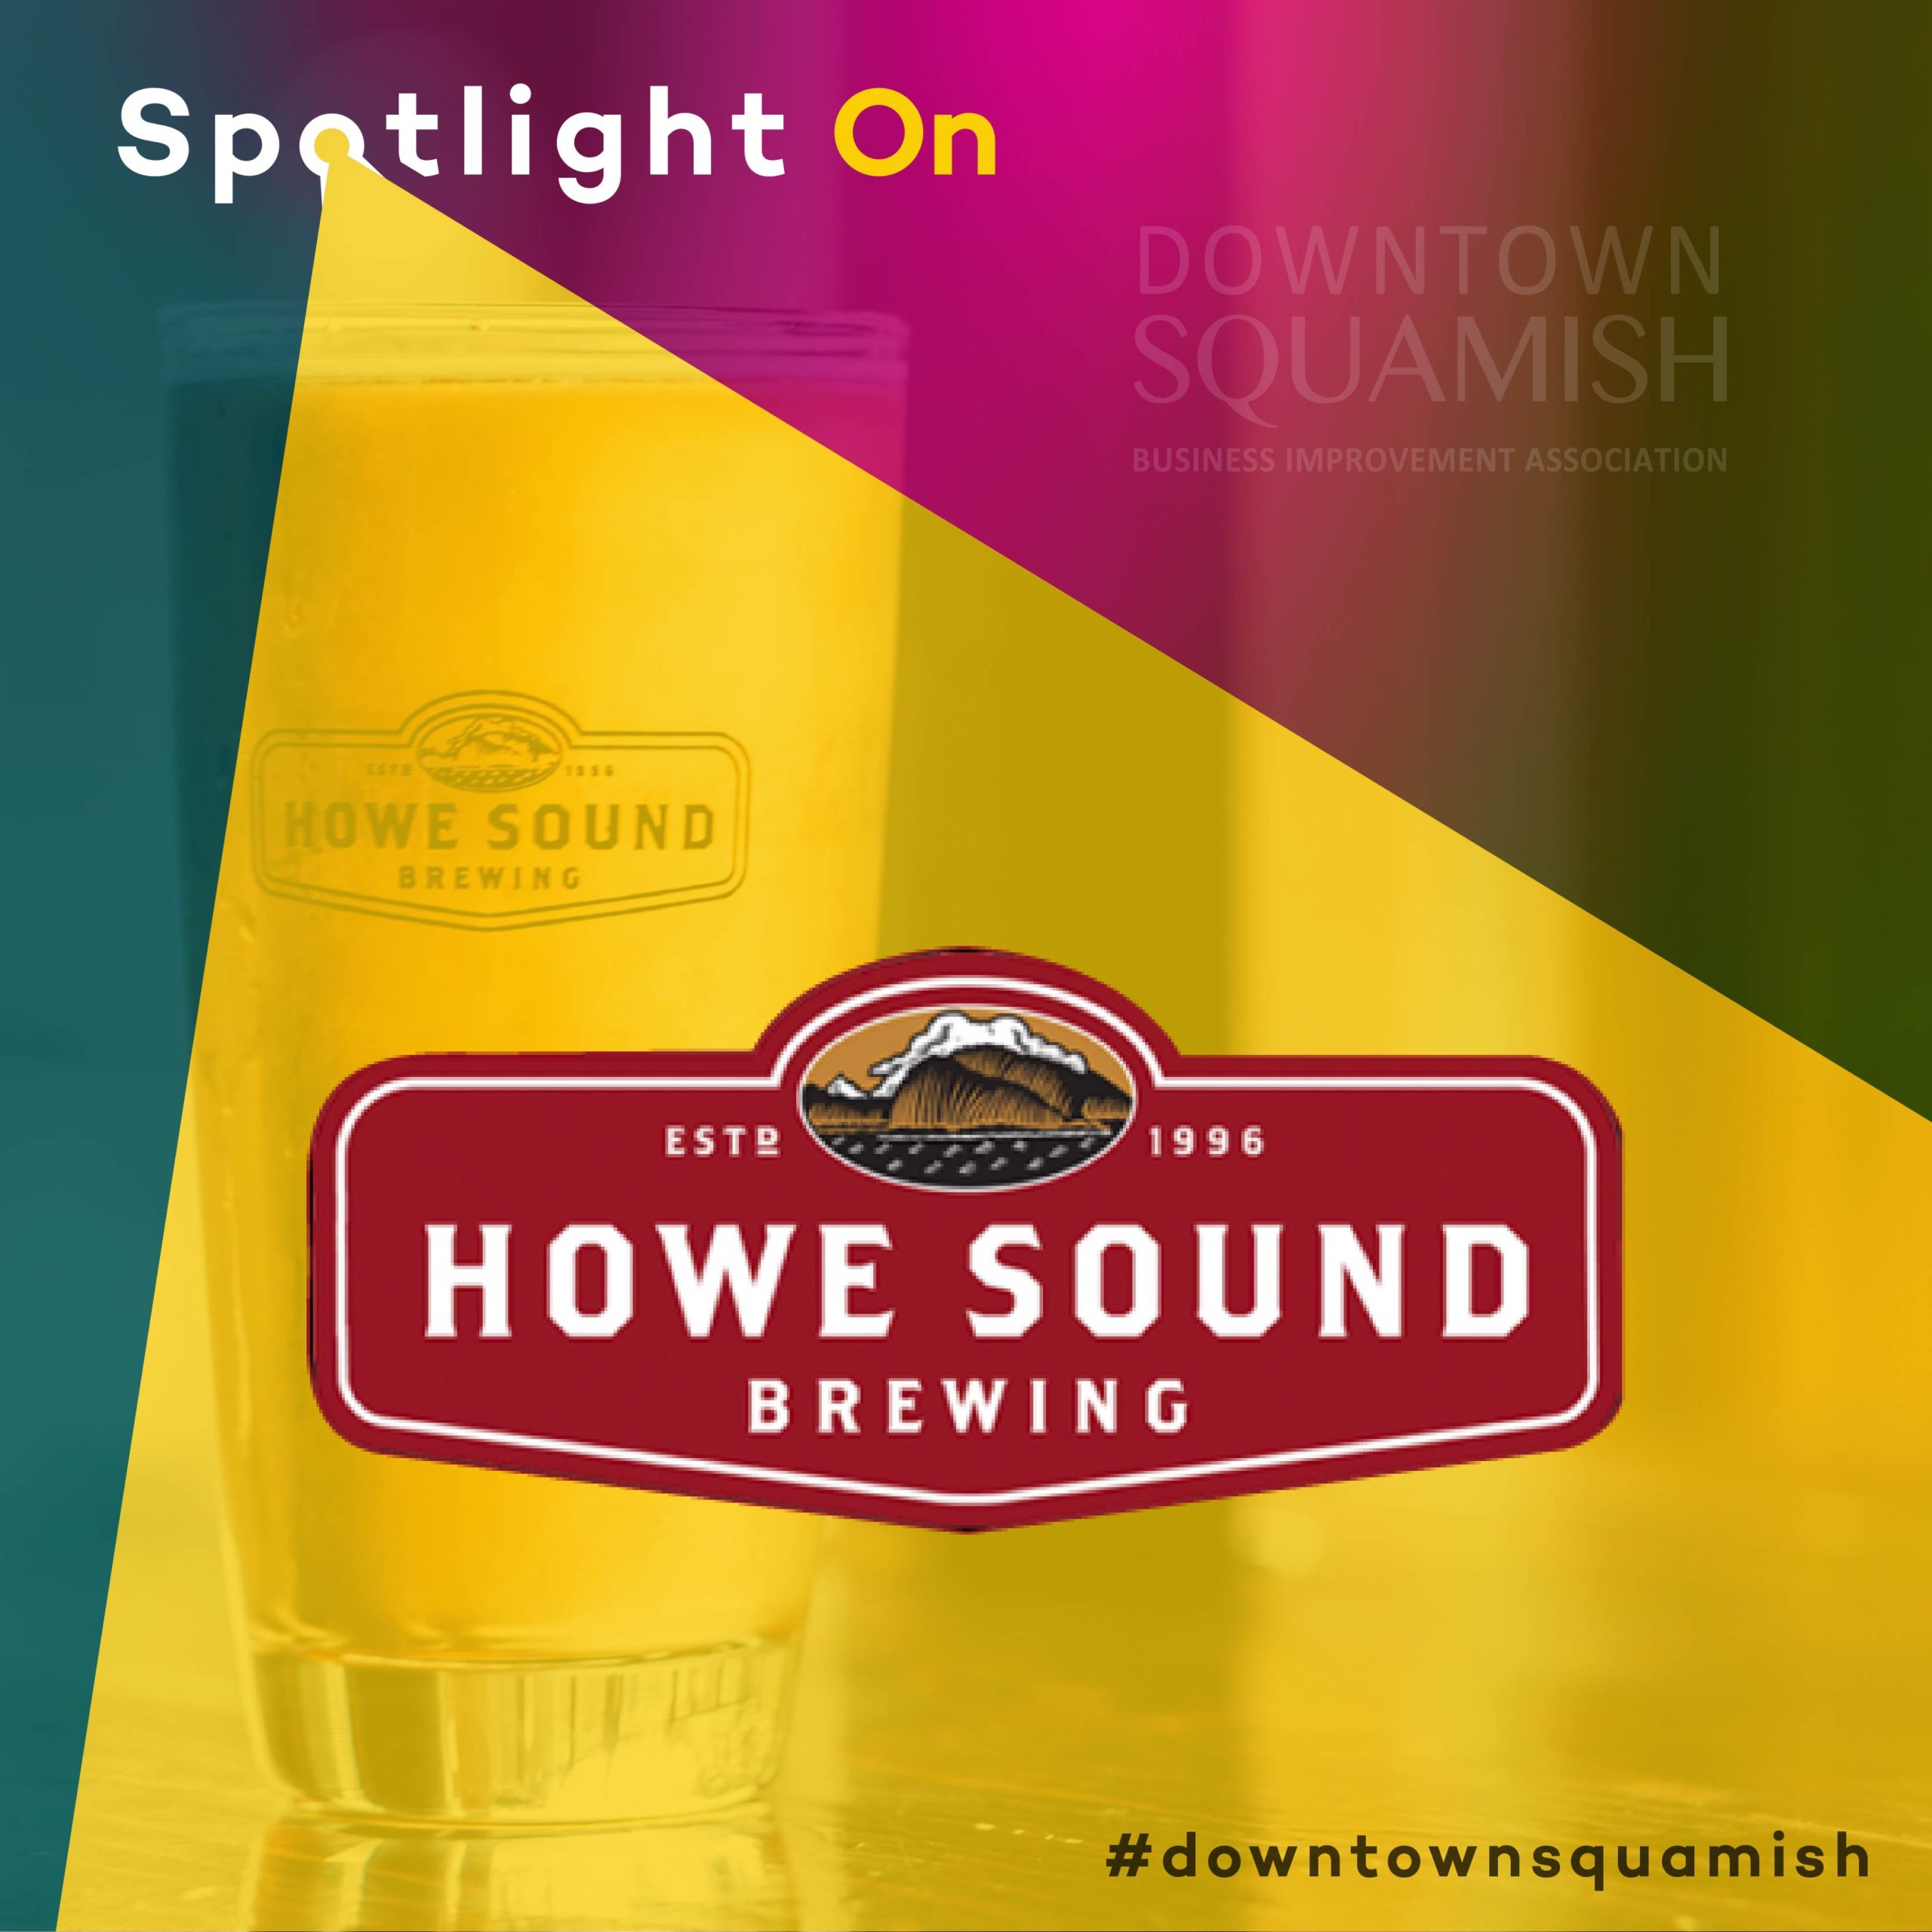 https://www.downtownsquamish.com/wp-content/uploads/2020/08/Spotlight_On_Howe_Sound-scaled-1.jpg